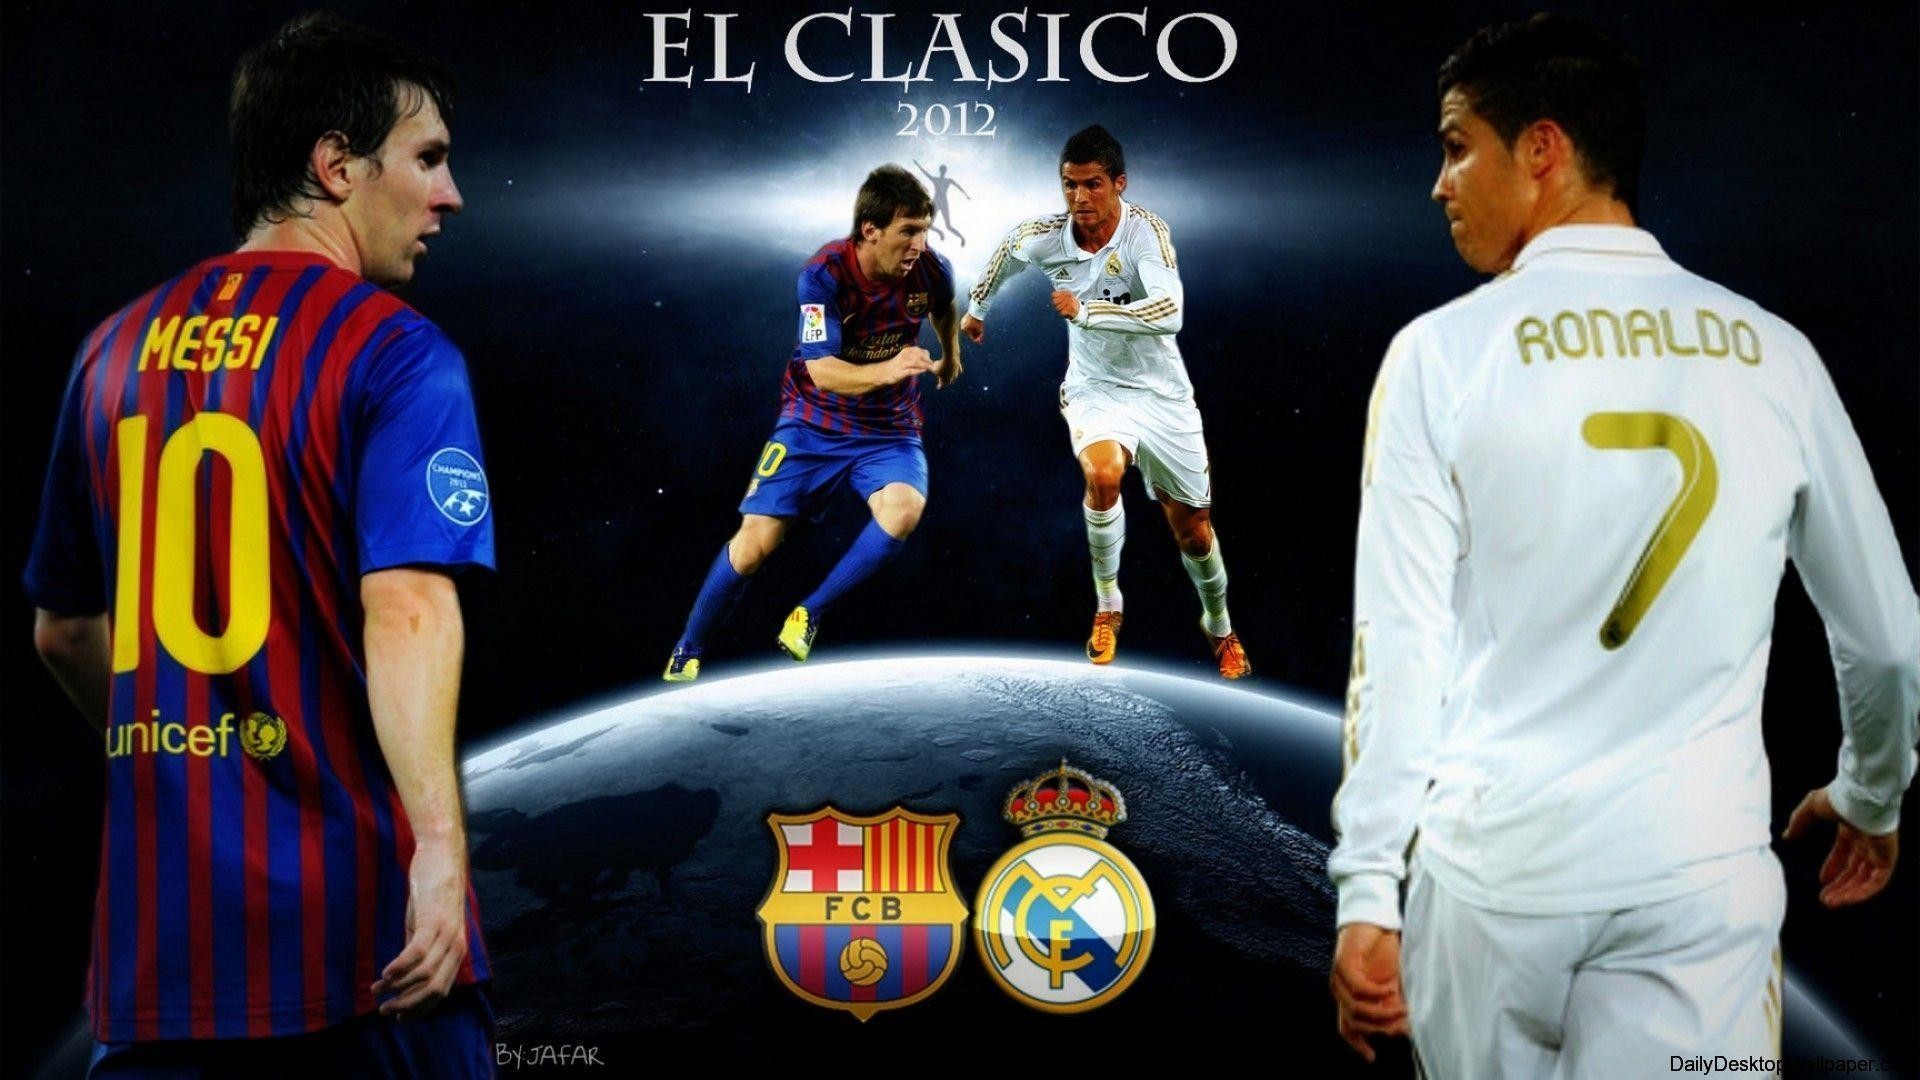 Messi And Ronaldo 2012 Messi wallpaper HD free wallpapers